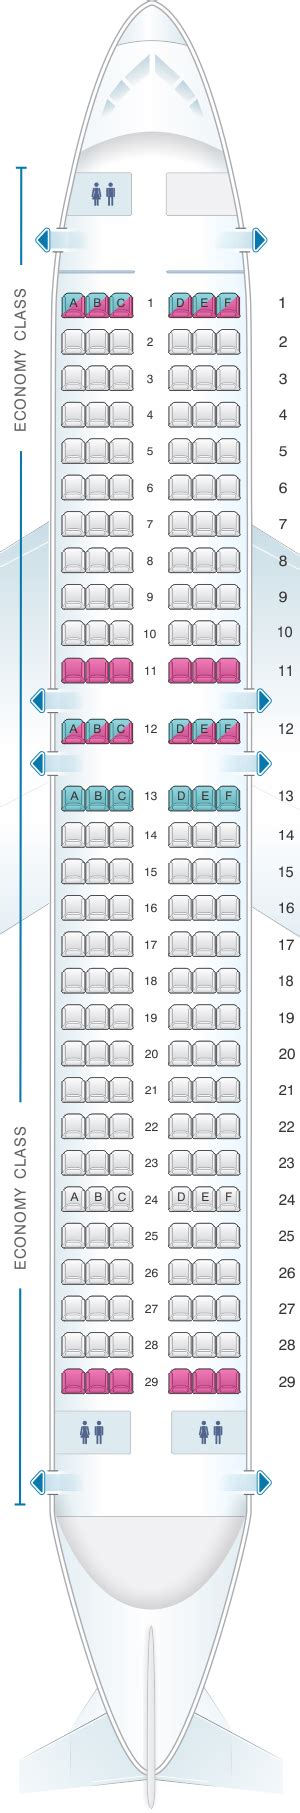 Plan de cabine Aer Lingus Airbus A320 | SeatMaestro.fr